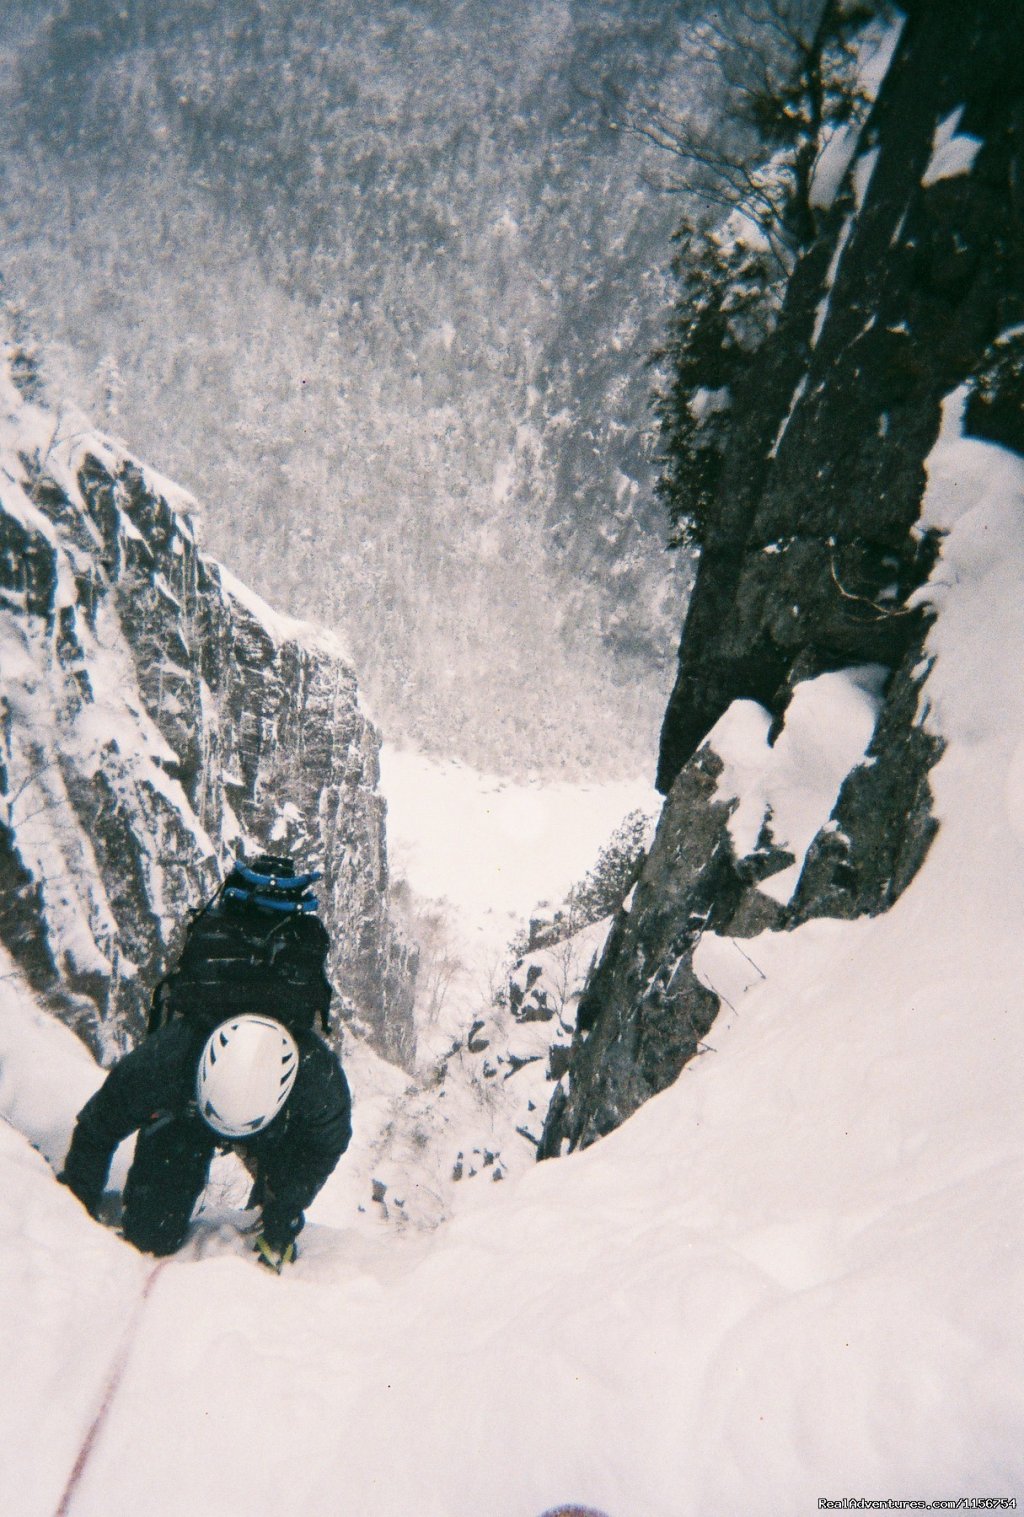 Trap Dike WI2 2000ft Adirondacks | Mountain Skills Climbing Guides- rock/ice climbing | Image #4/19 | 